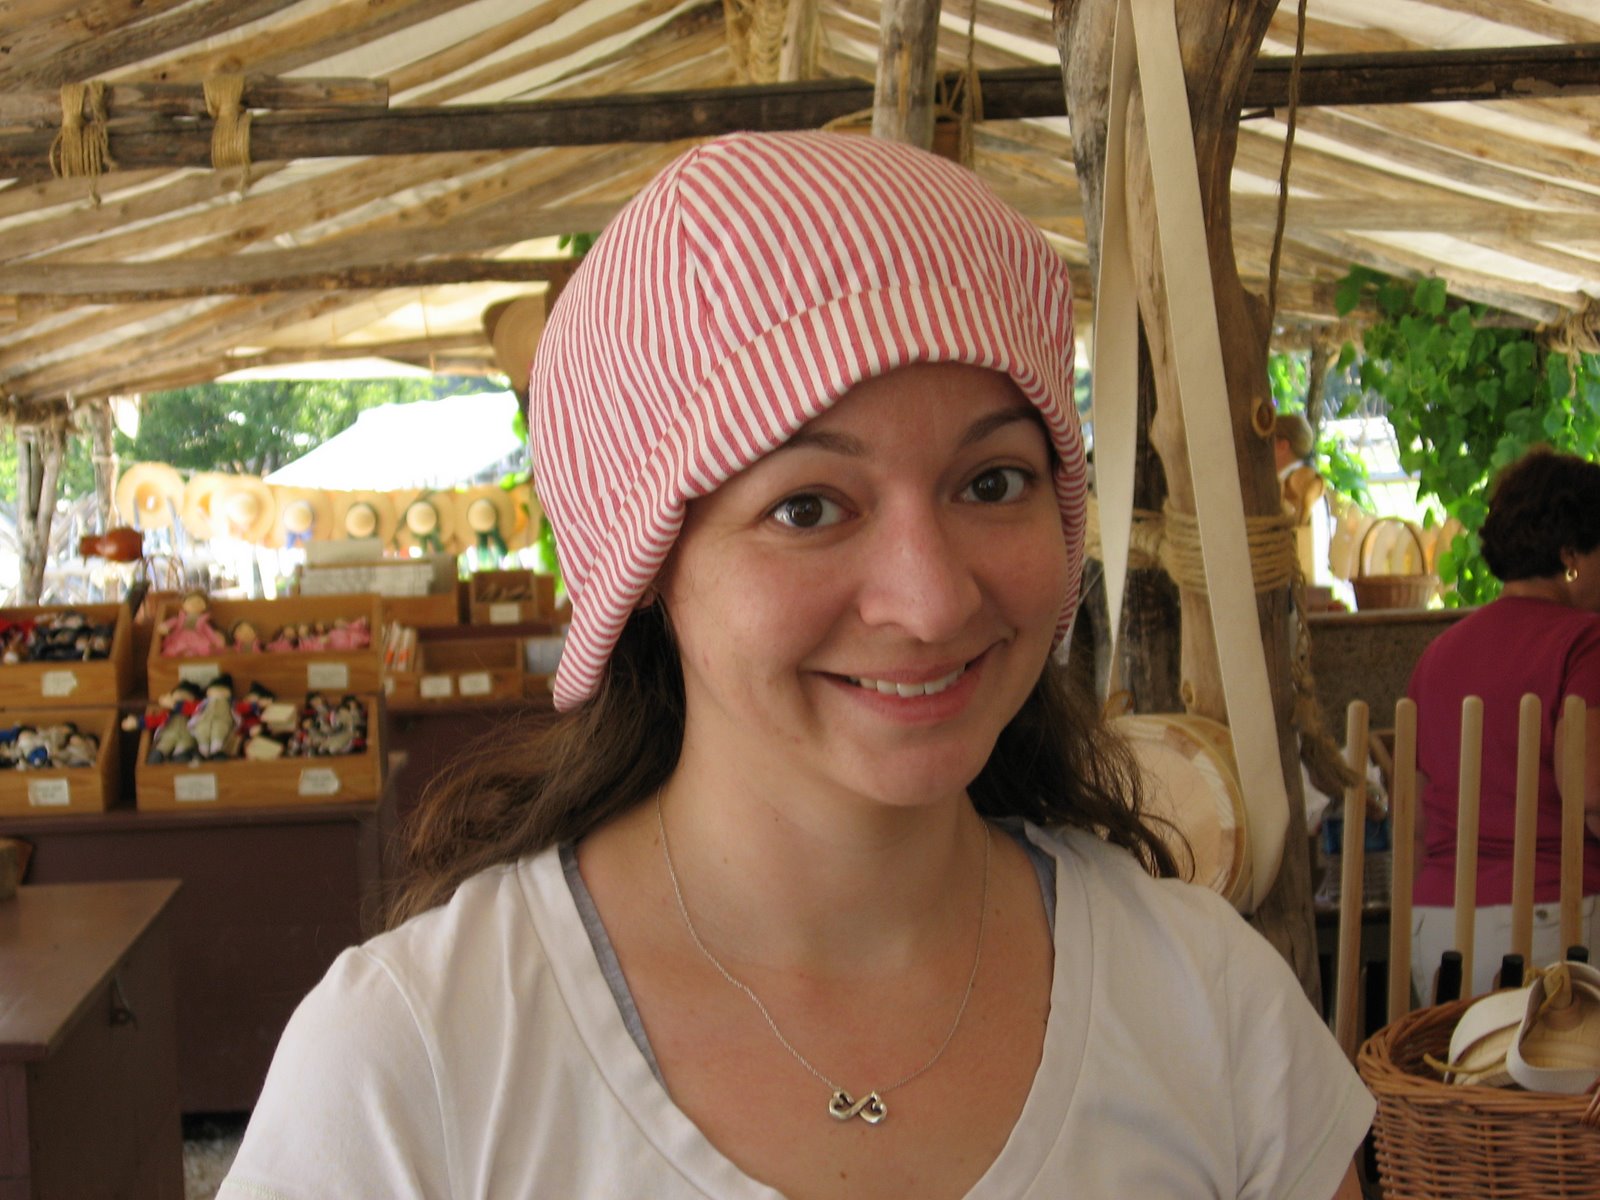 [Cathy+in+a+striped+hat.JPG]